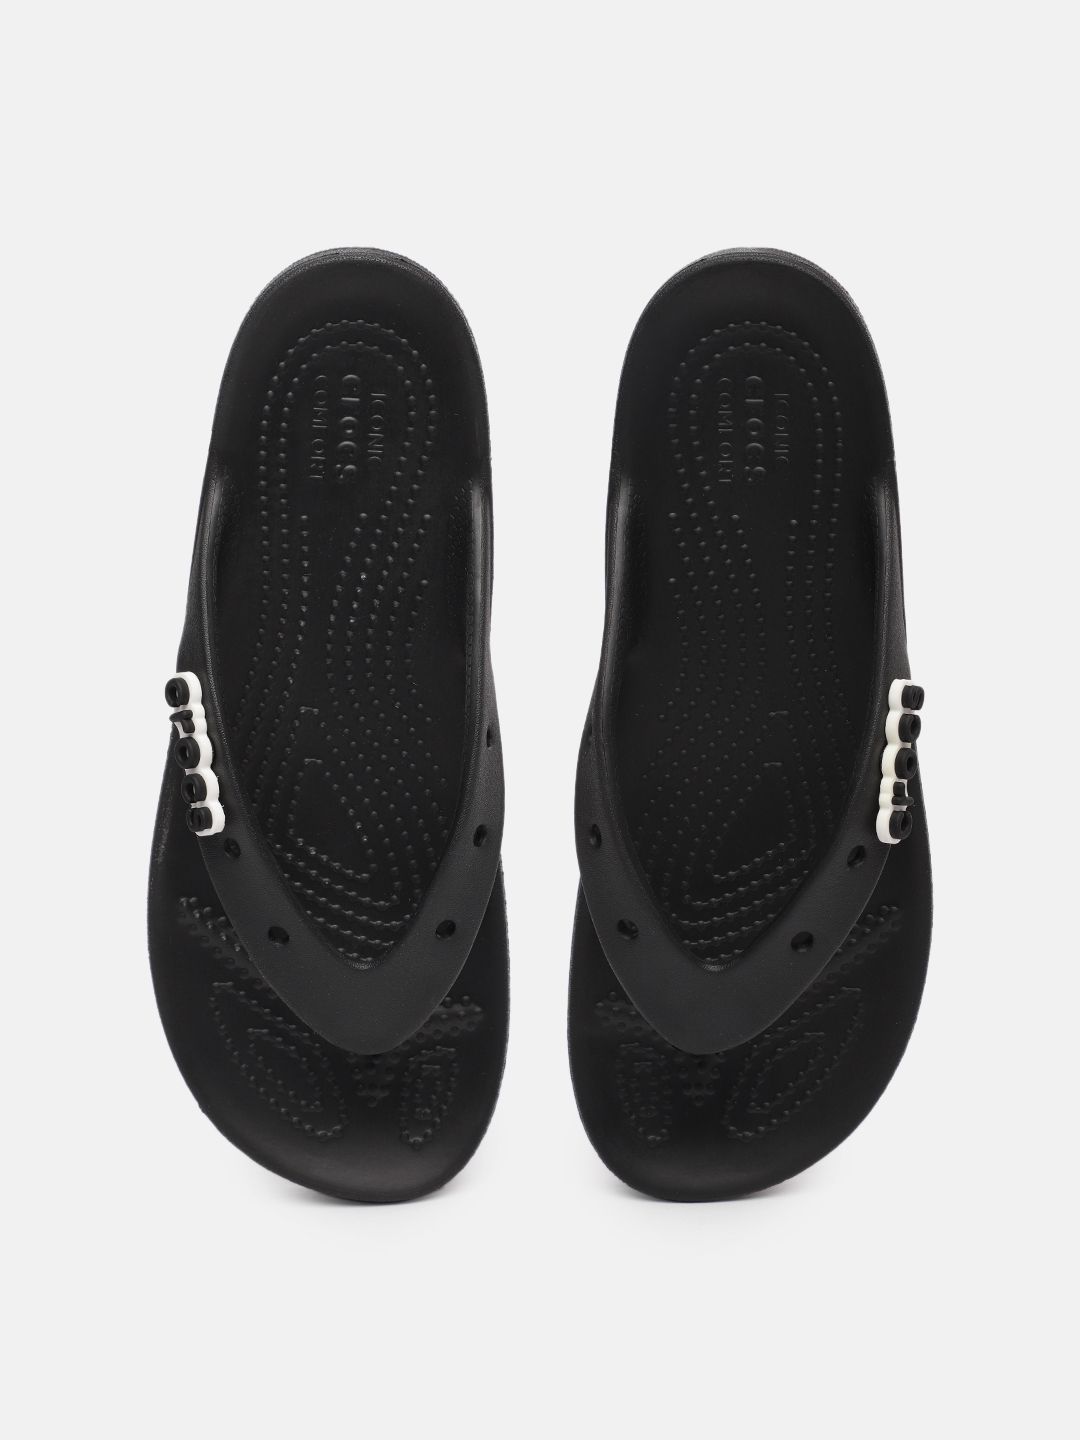 Crocs Women Black Croslite Thong Flip-Flops Price in India